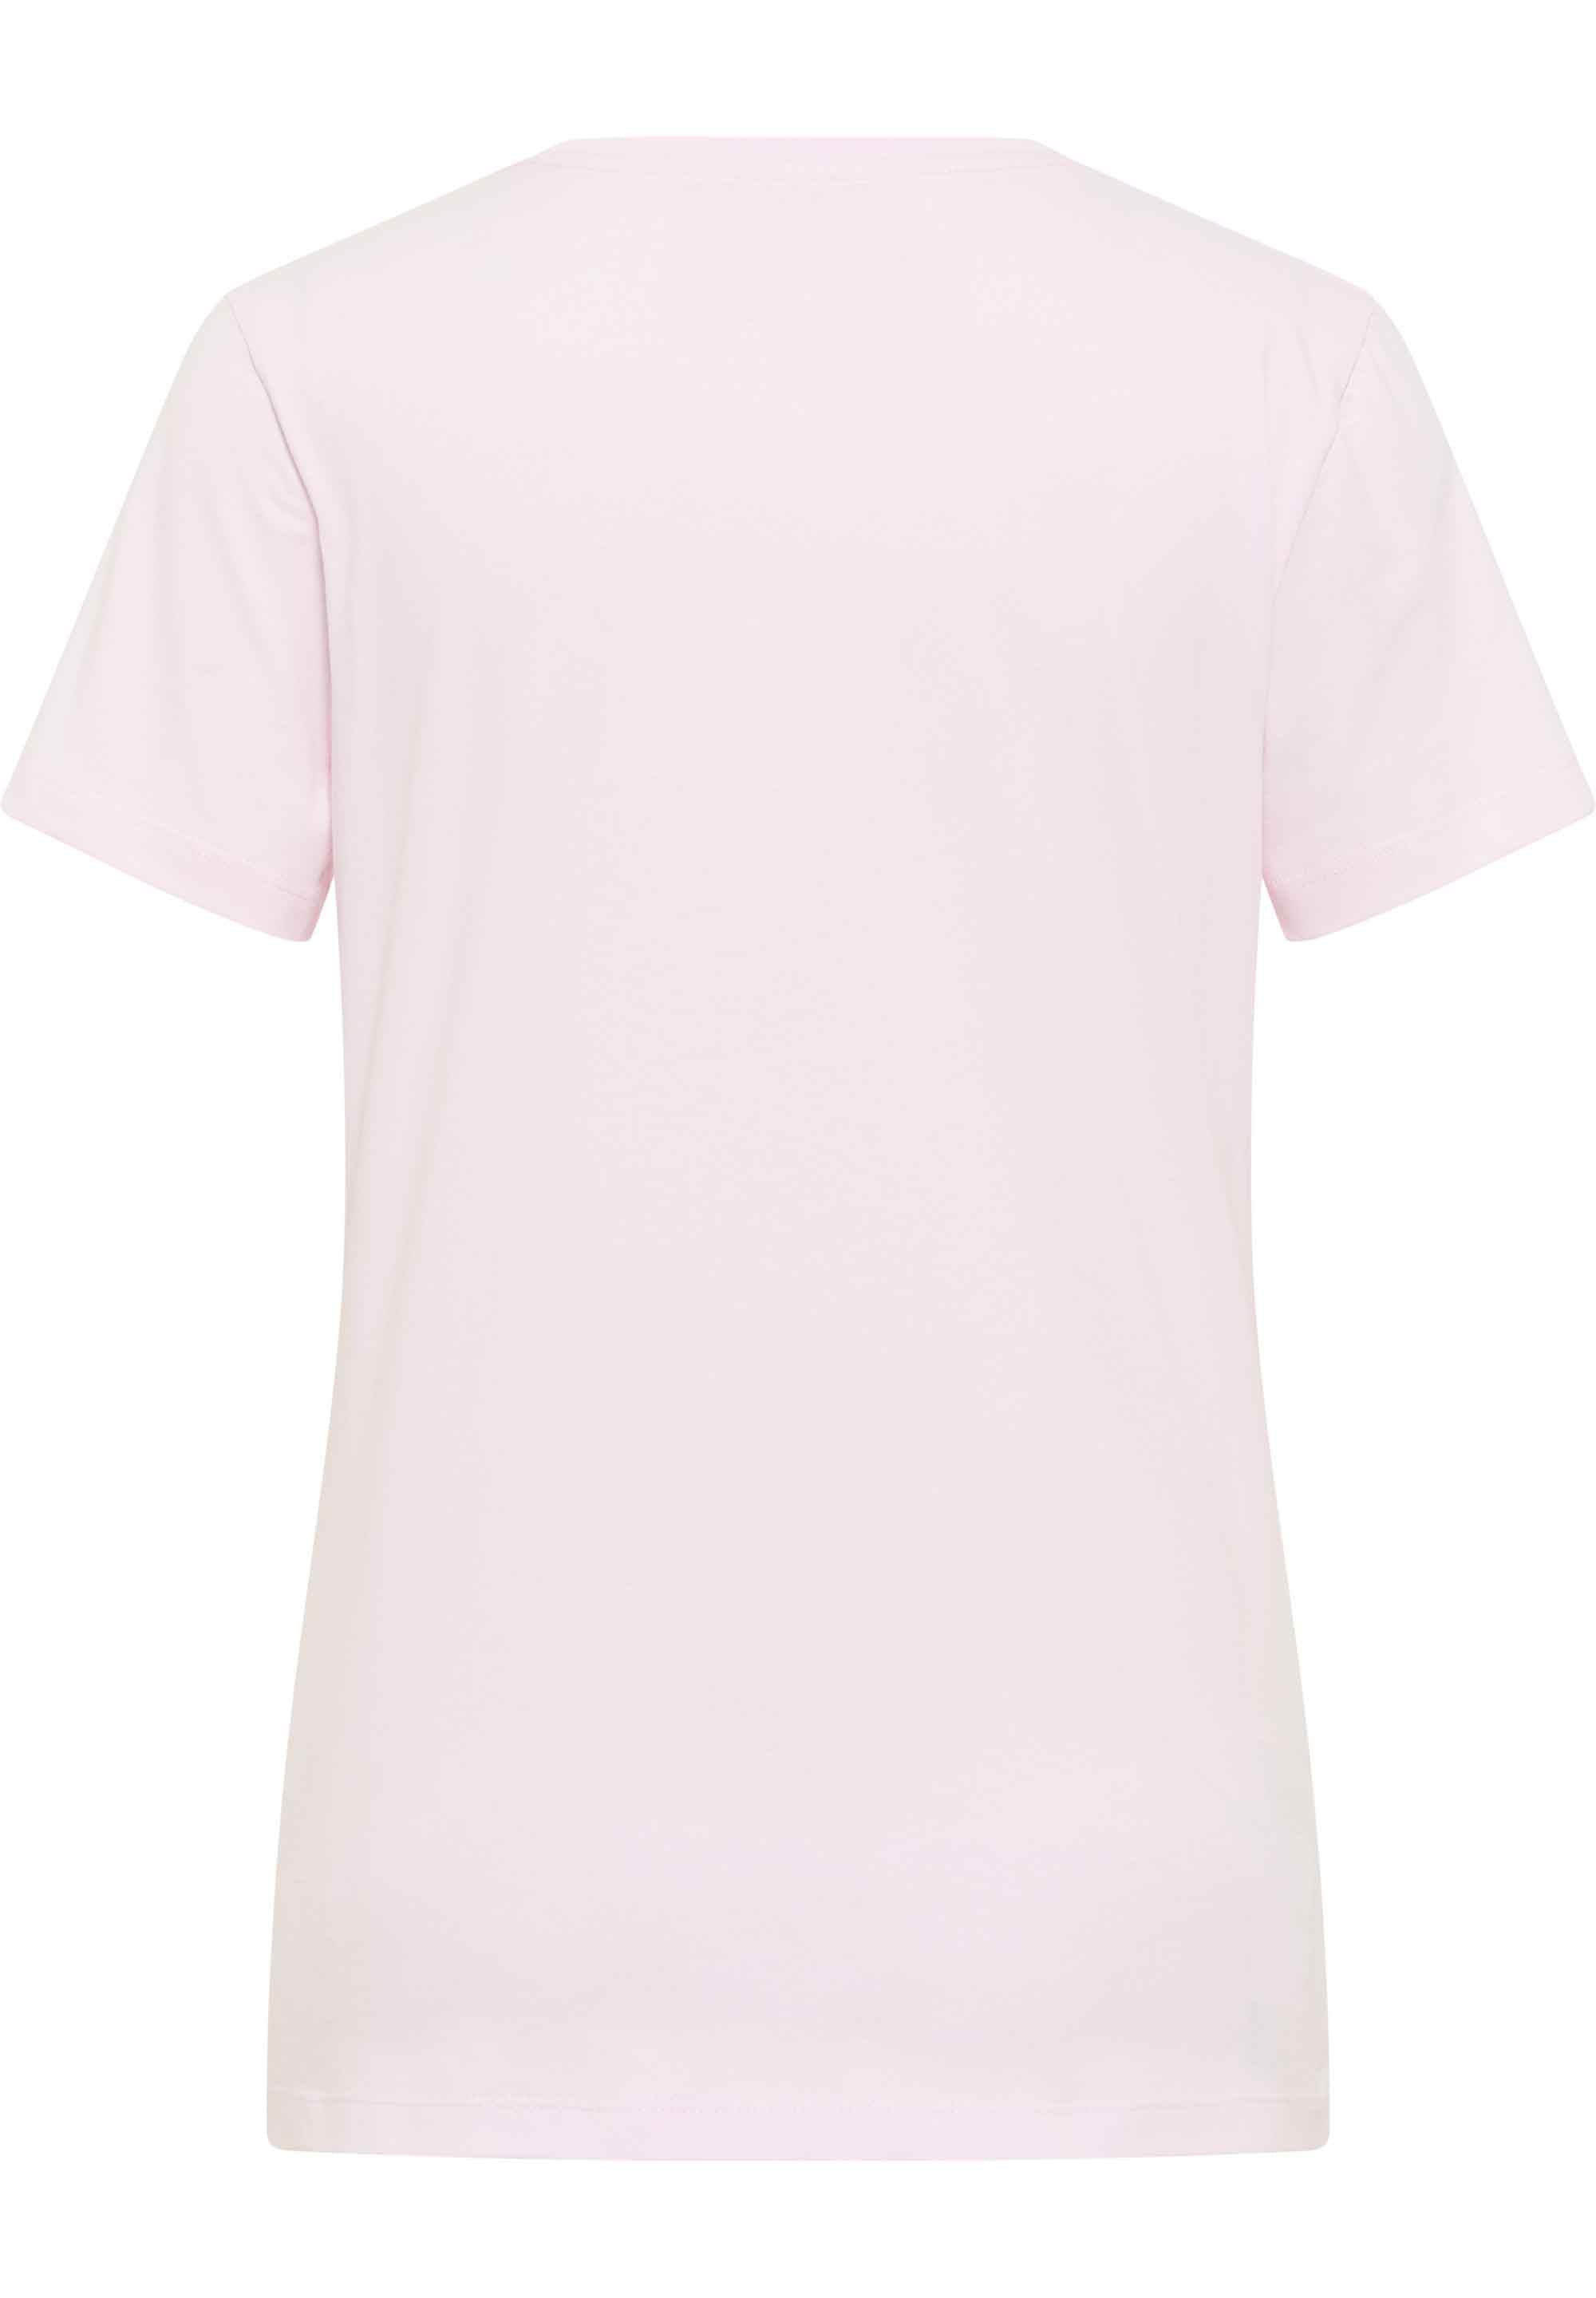 SOMWR BANDIT T-Shirt PUR001